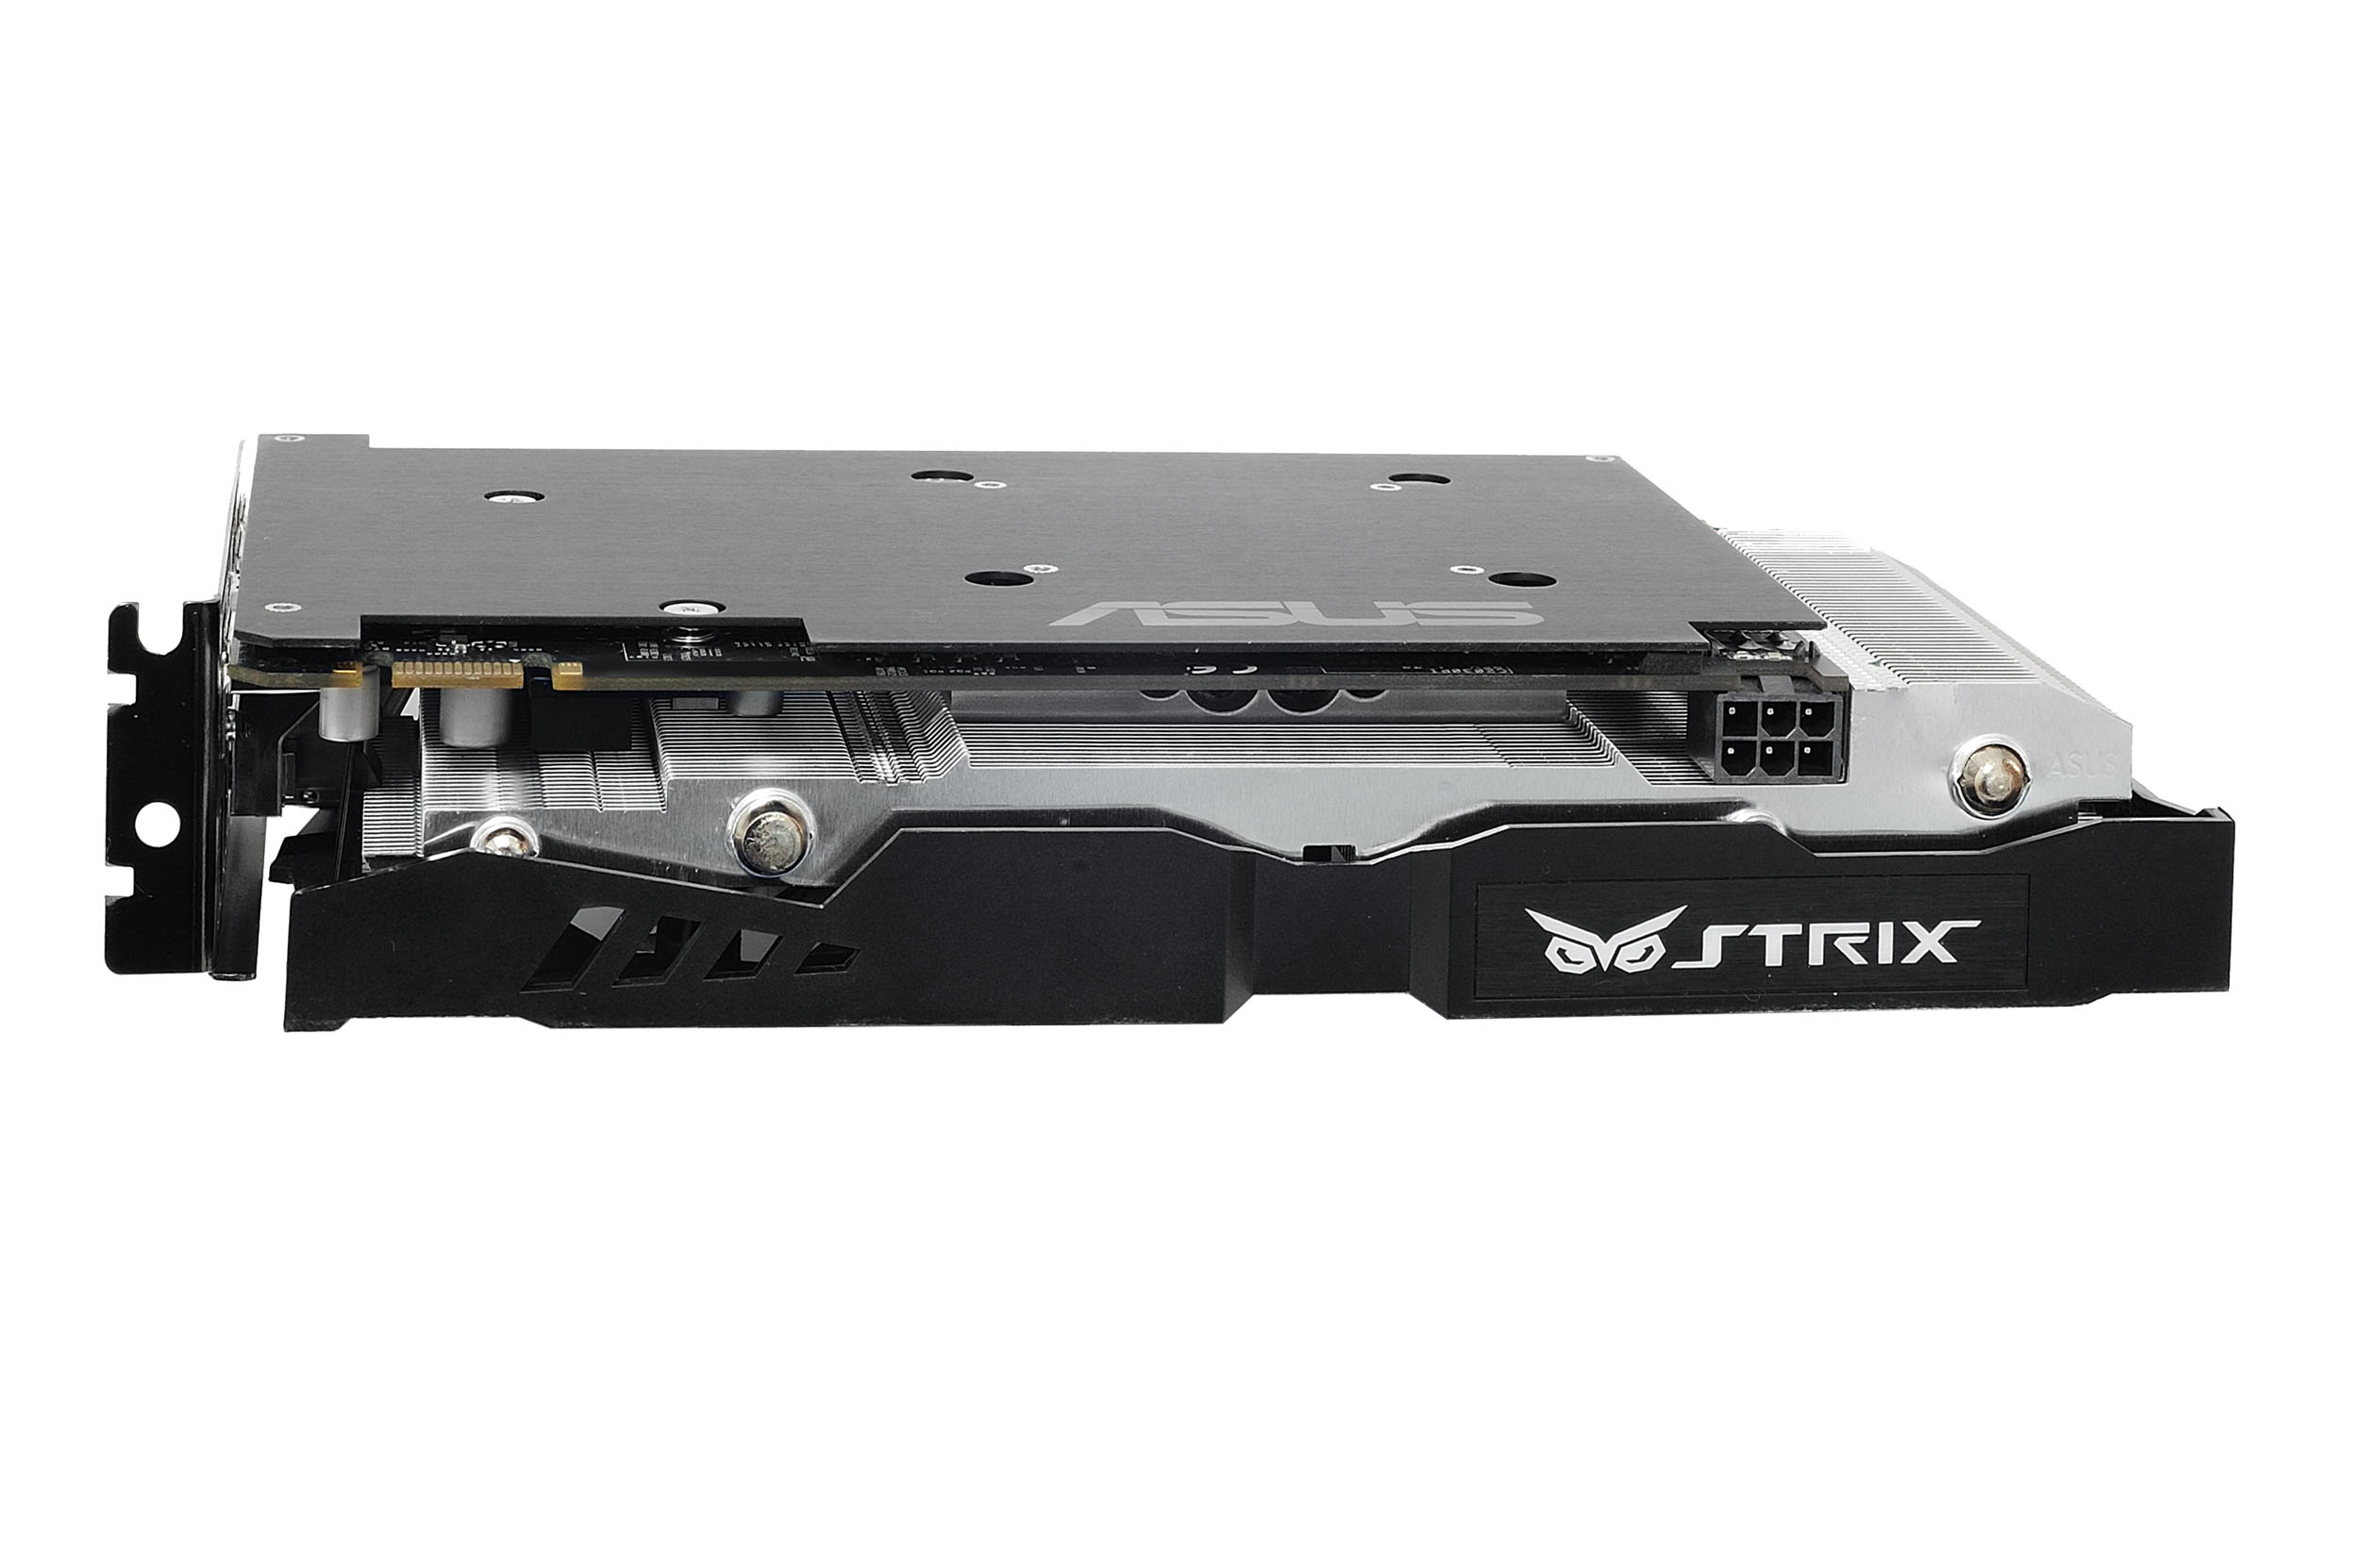 ASUS Announces Strix GTX 960 4GB 